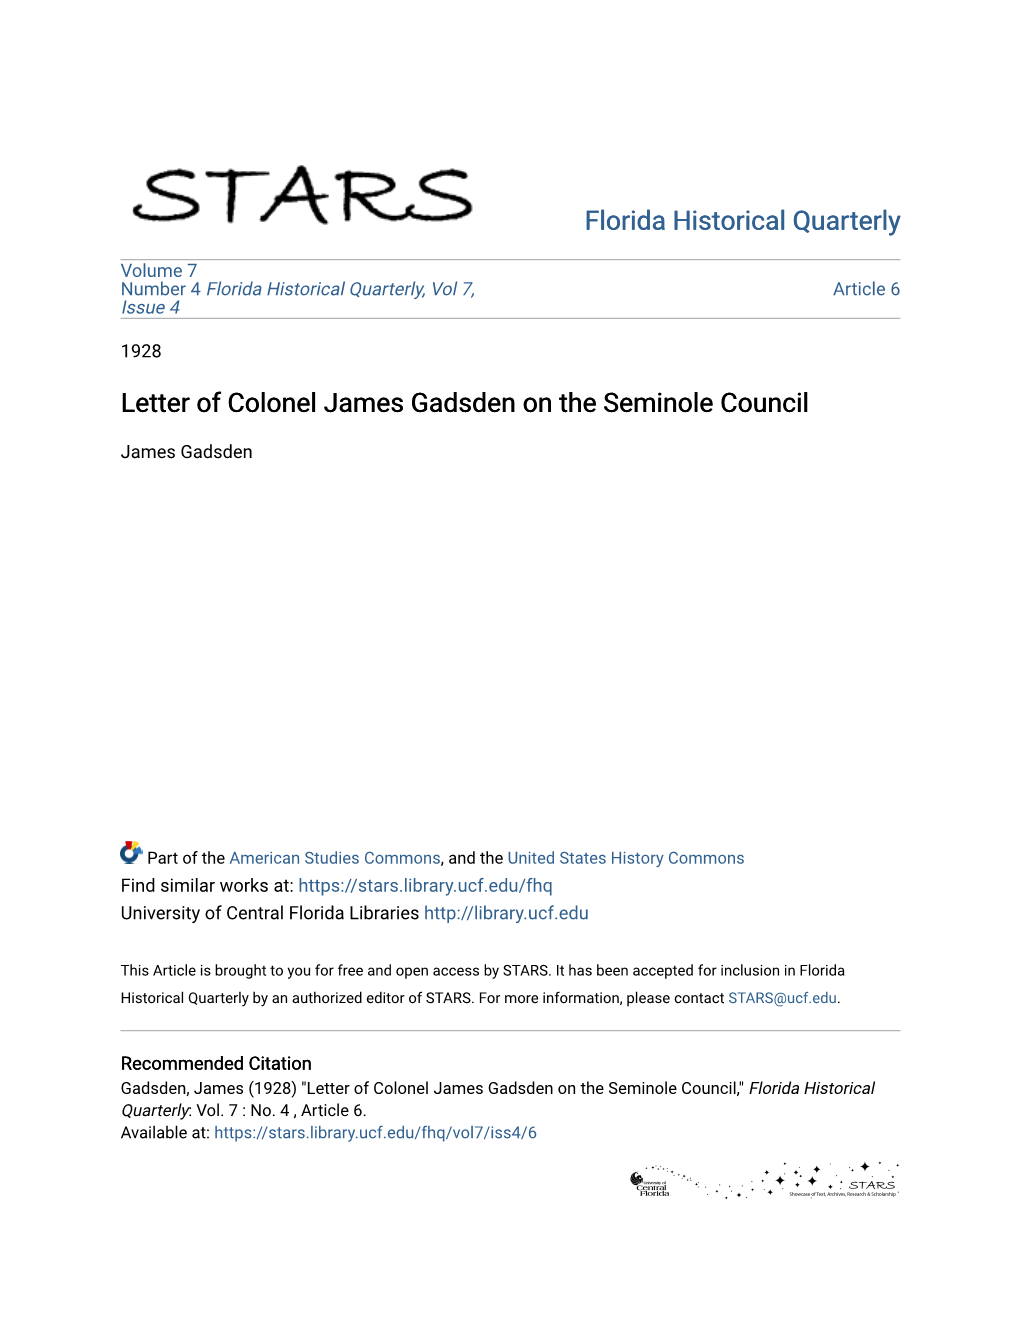 Letter of Colonel James Gadsden on the Seminole Council